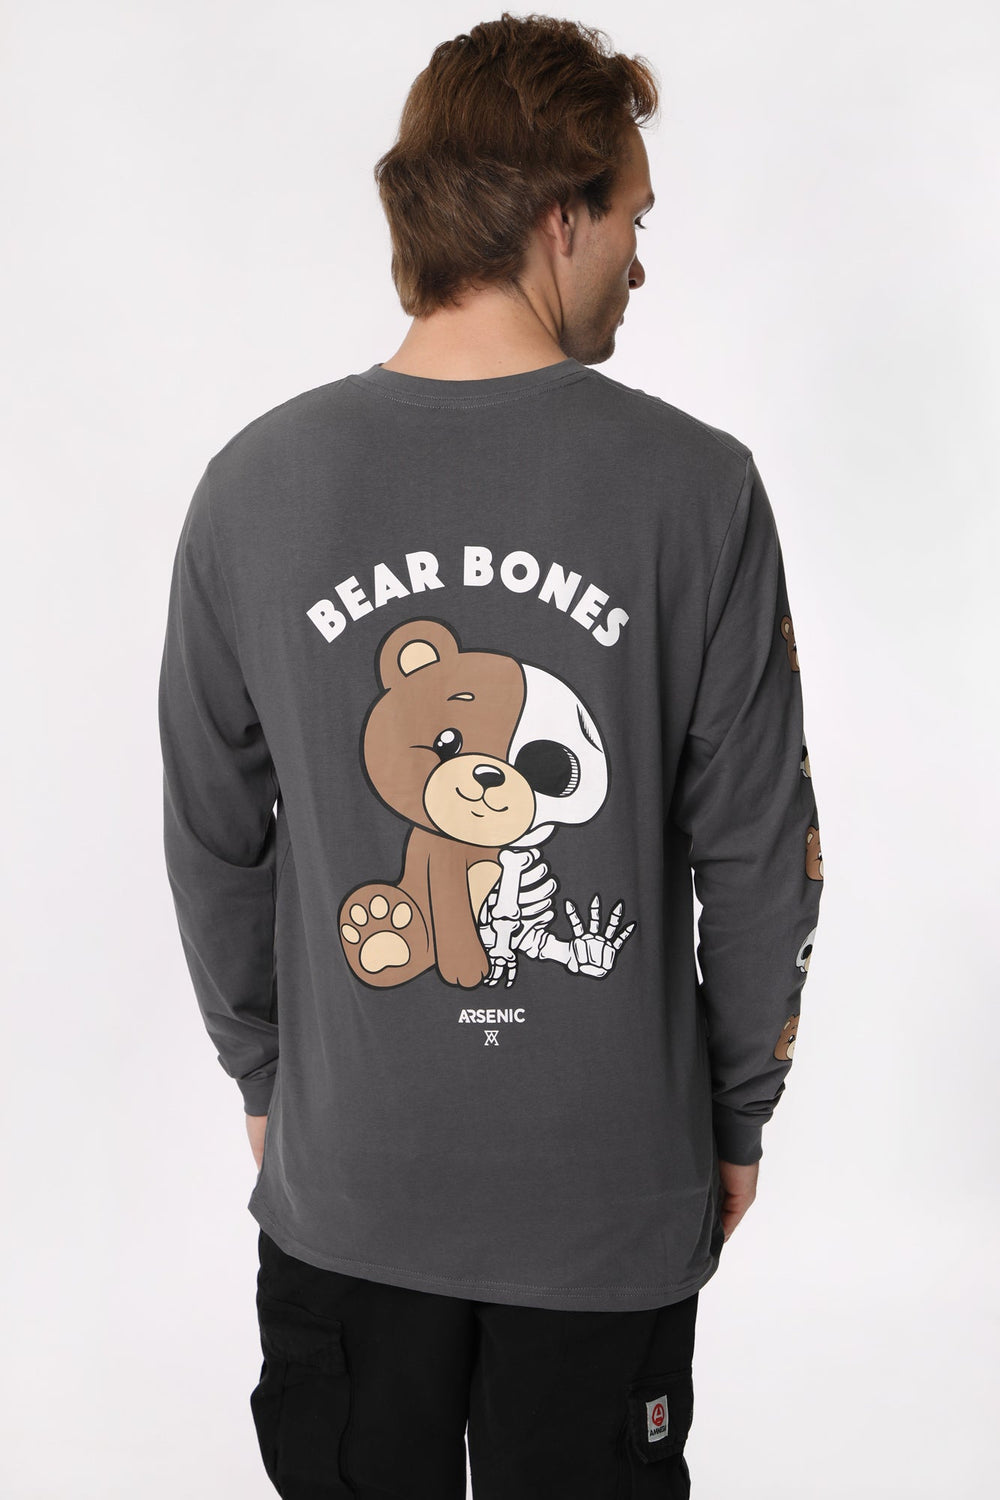 Arsenic Mens Bear Bones Long Sleeve Top Arsenic Mens Bear Bones Long Sleeve Top